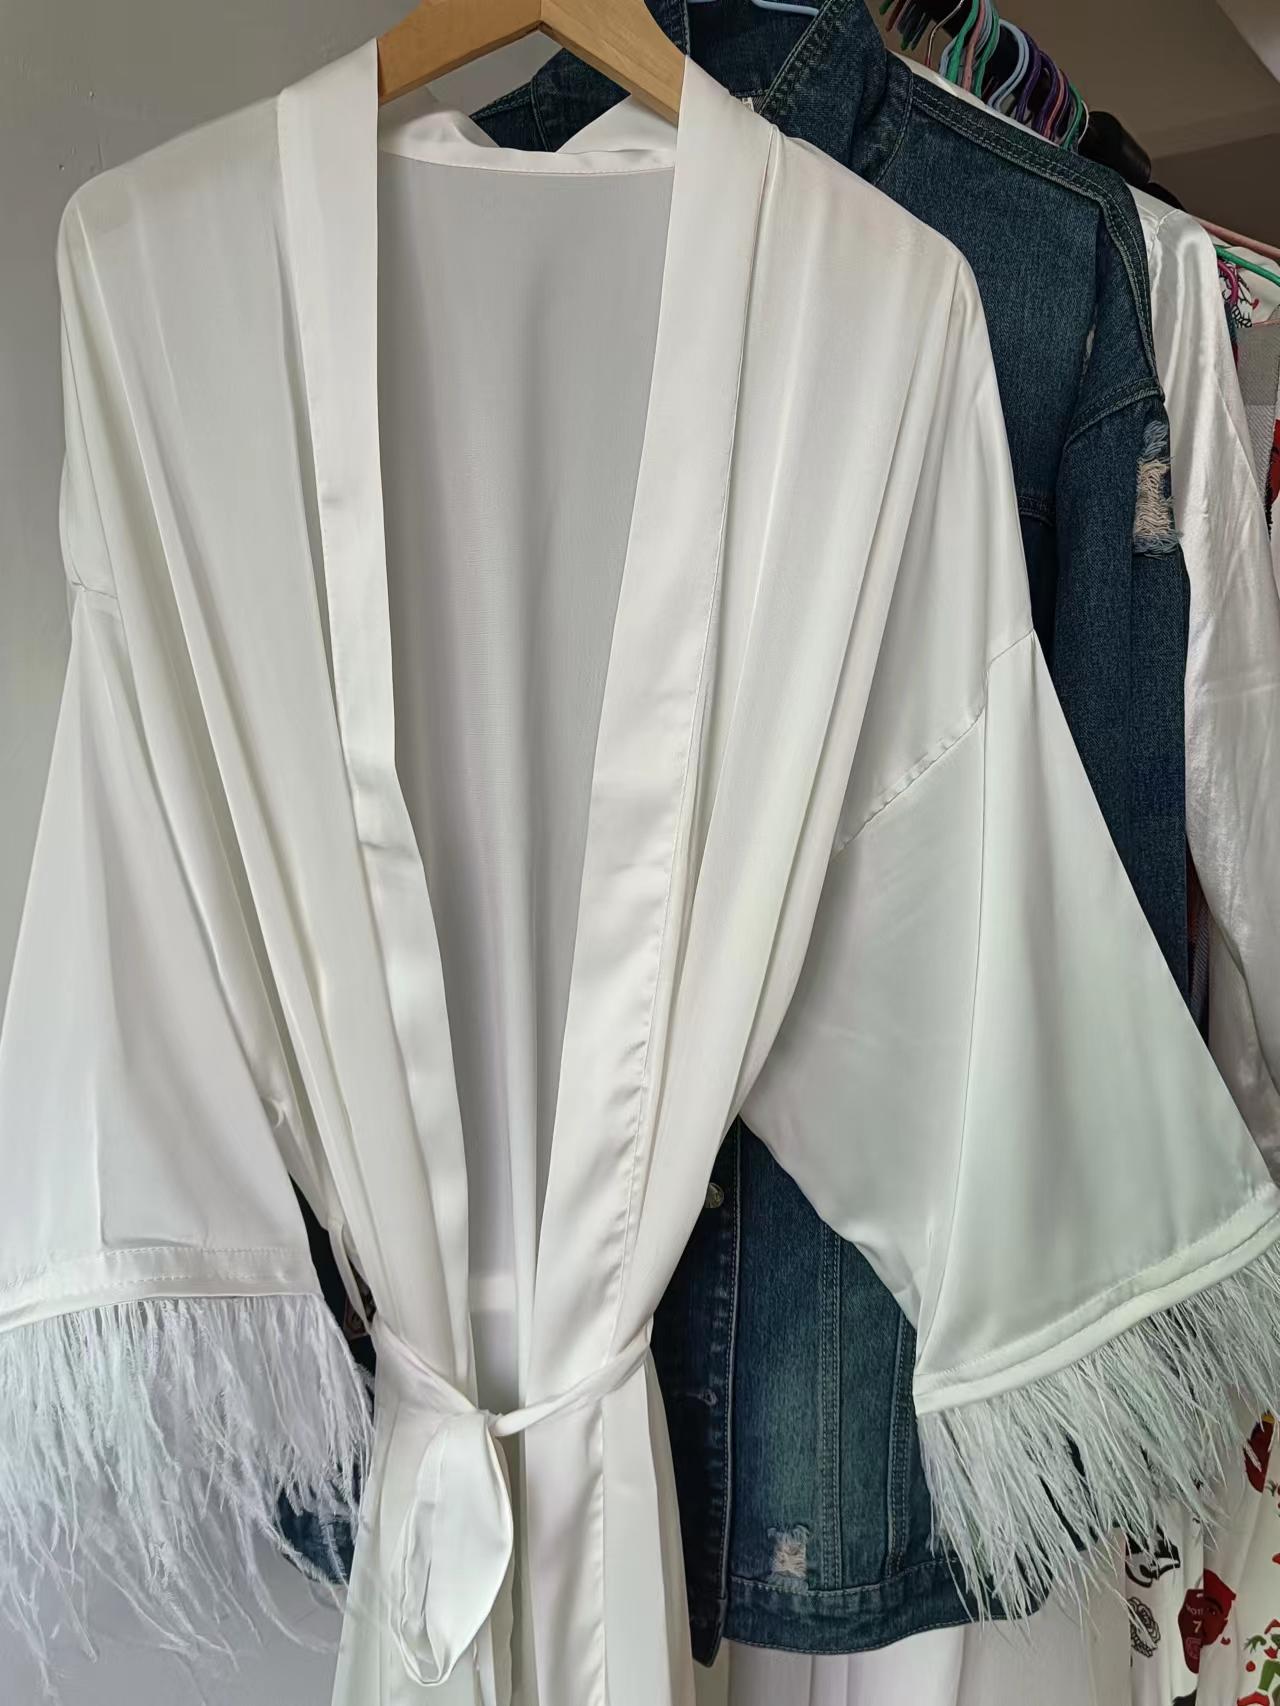 Lizakosht Bride Robe With Feather Sleeves White Boudoir Robe Long Gown Silk Bridal Wedding Dressing Gown Women Sheer Robes Bridesmaid Gift